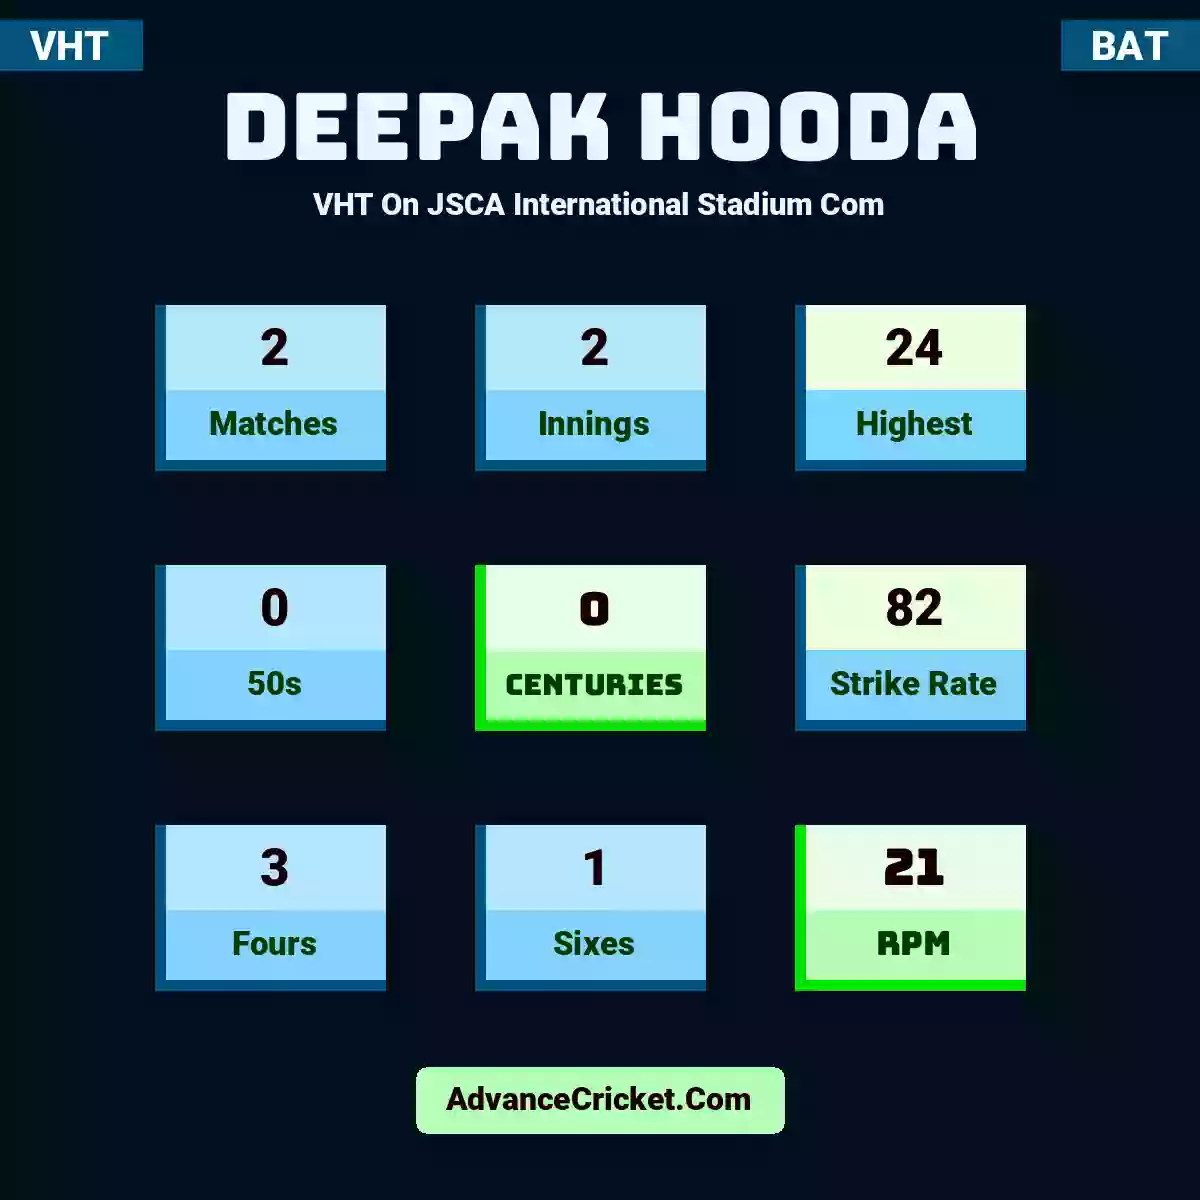 Deepak Hooda VHT  On JSCA International Stadium Com, Deepak Hooda played 2 matches, scored 24 runs as highest, 0 half-centuries, and 0 centuries, with a strike rate of 82. D.Hooda hit 3 fours and 1 sixes, with an RPM of 21.